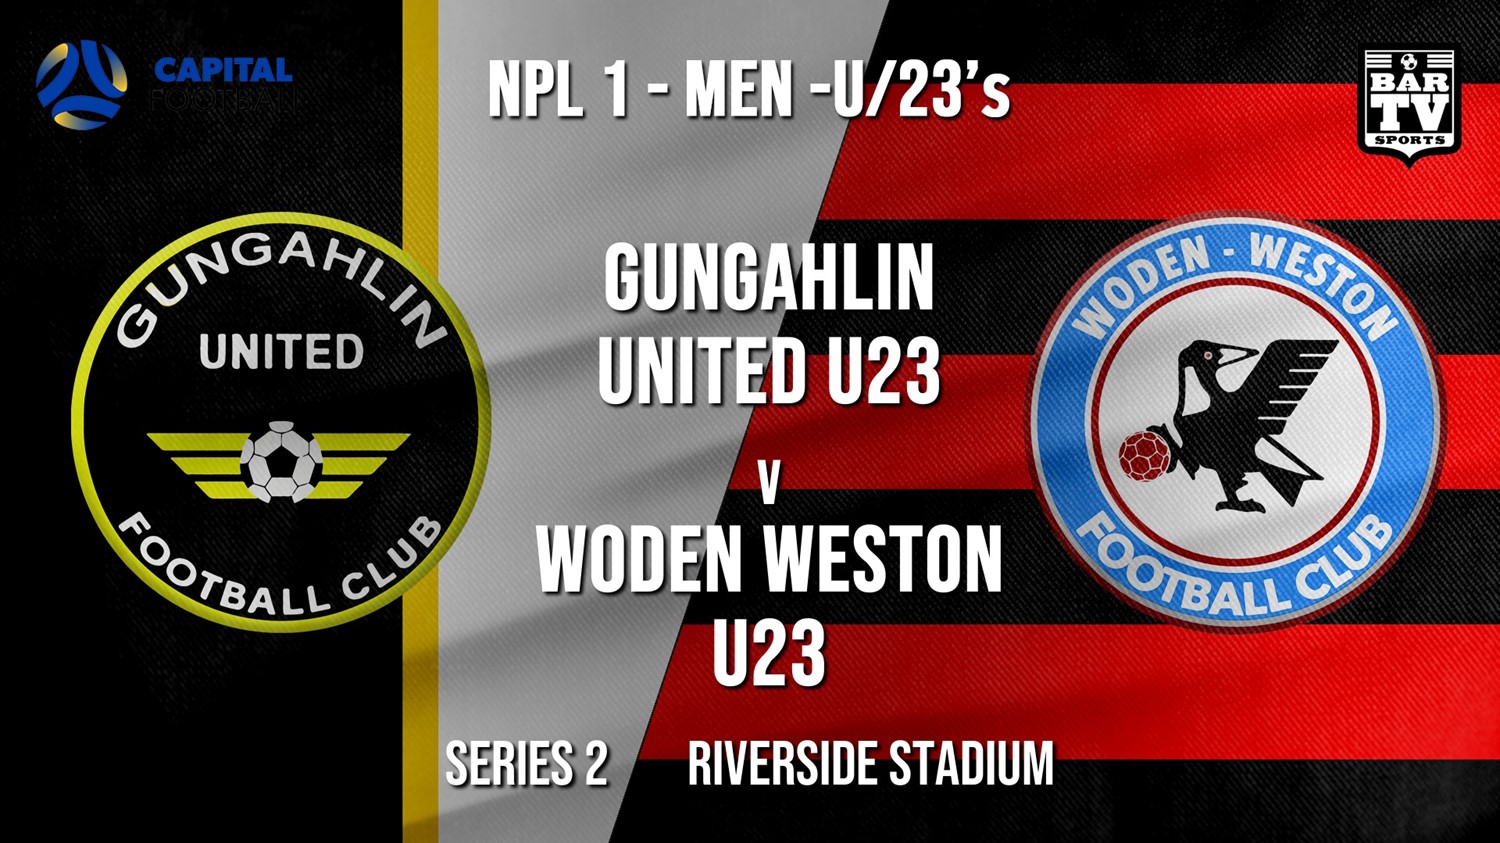 NPL1 Men - U23 - Capital Football  Series 2 - Gungahlin United U23 v Woden Weston U23 Minigame Slate Image